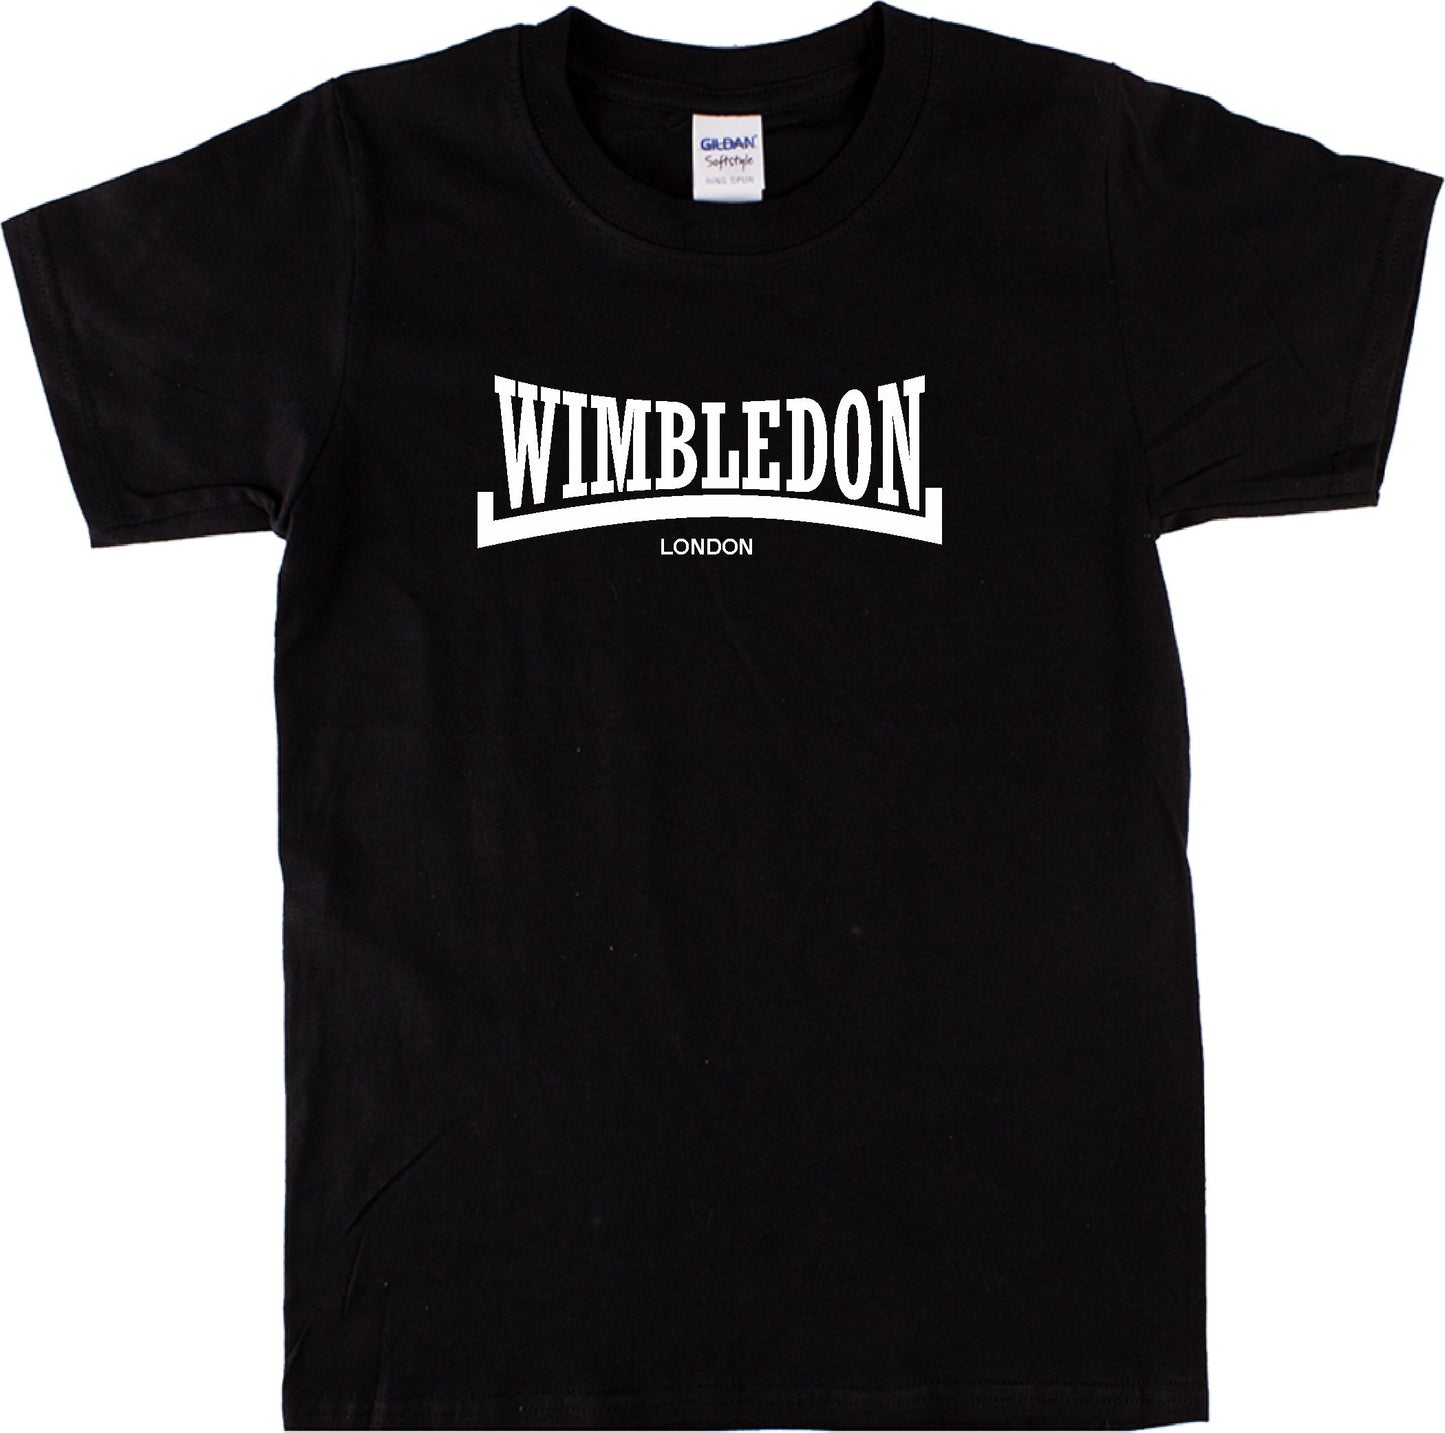 Wimbledon T-Shirt - London Souvenir, Personalised Custom Print Available, Various Colours